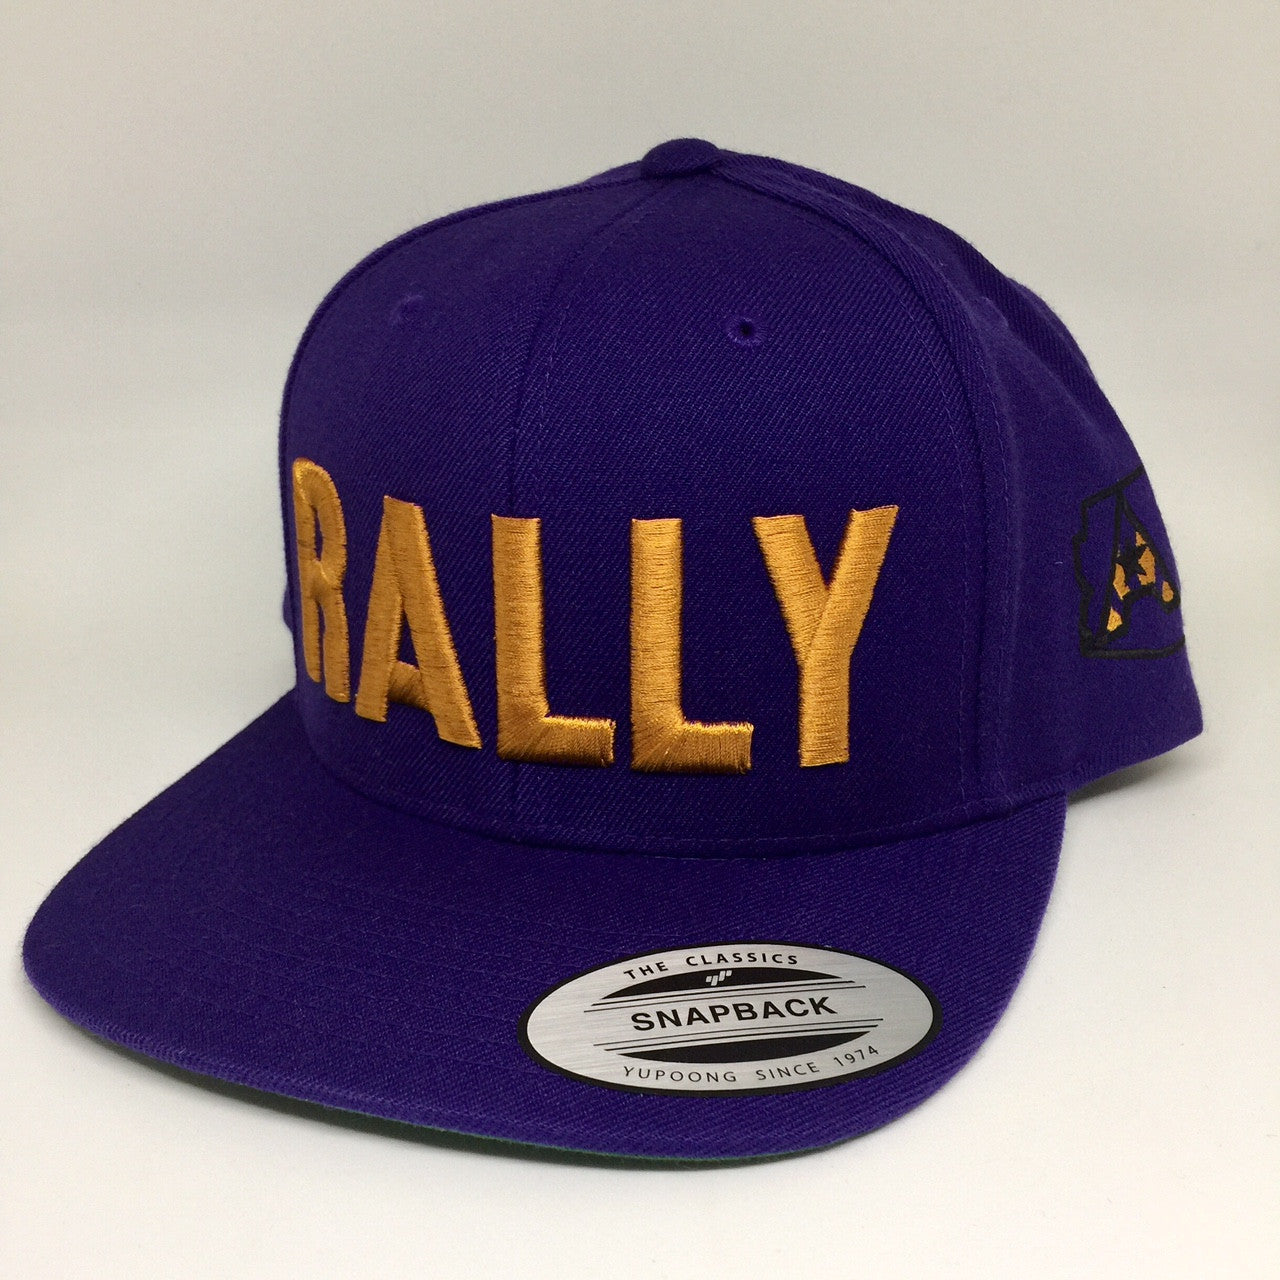 Rally Cap Flatbill Snapback Cap - Purple/Copper